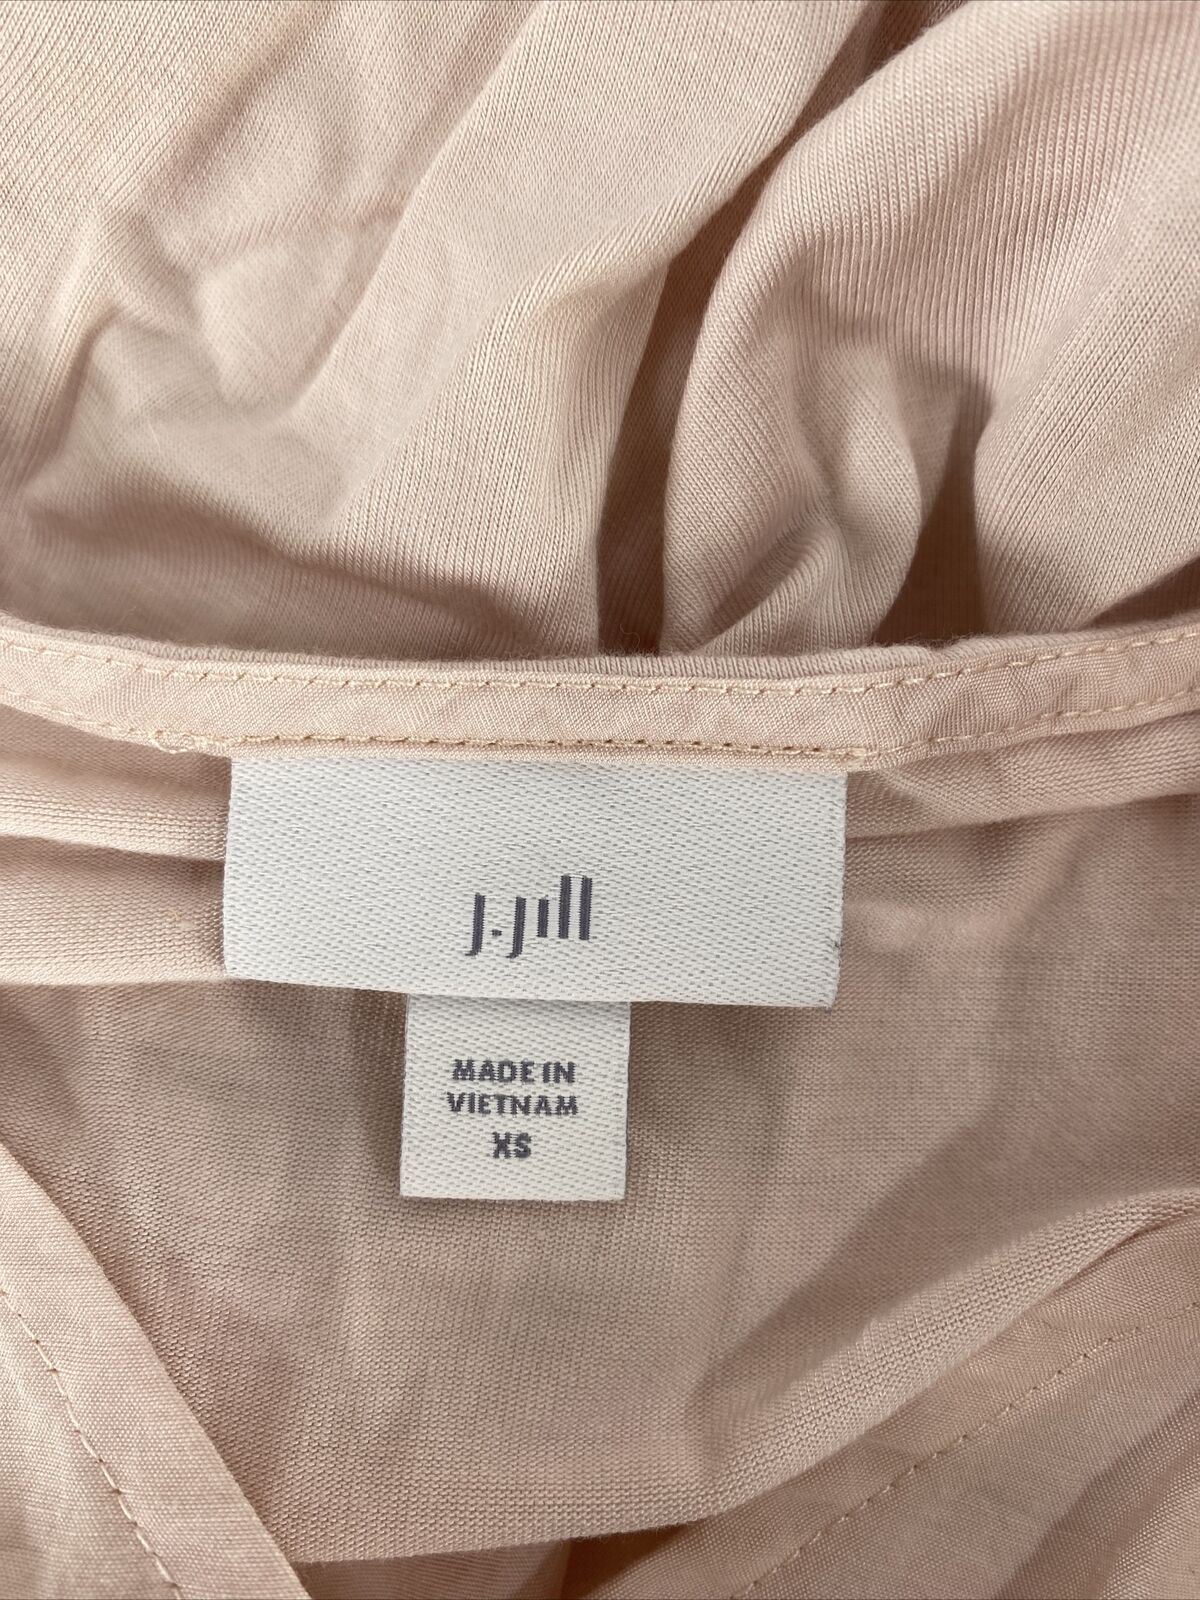 J.Jill Women's Pink 3/4 Sleeve V-Neck Blouse - XS